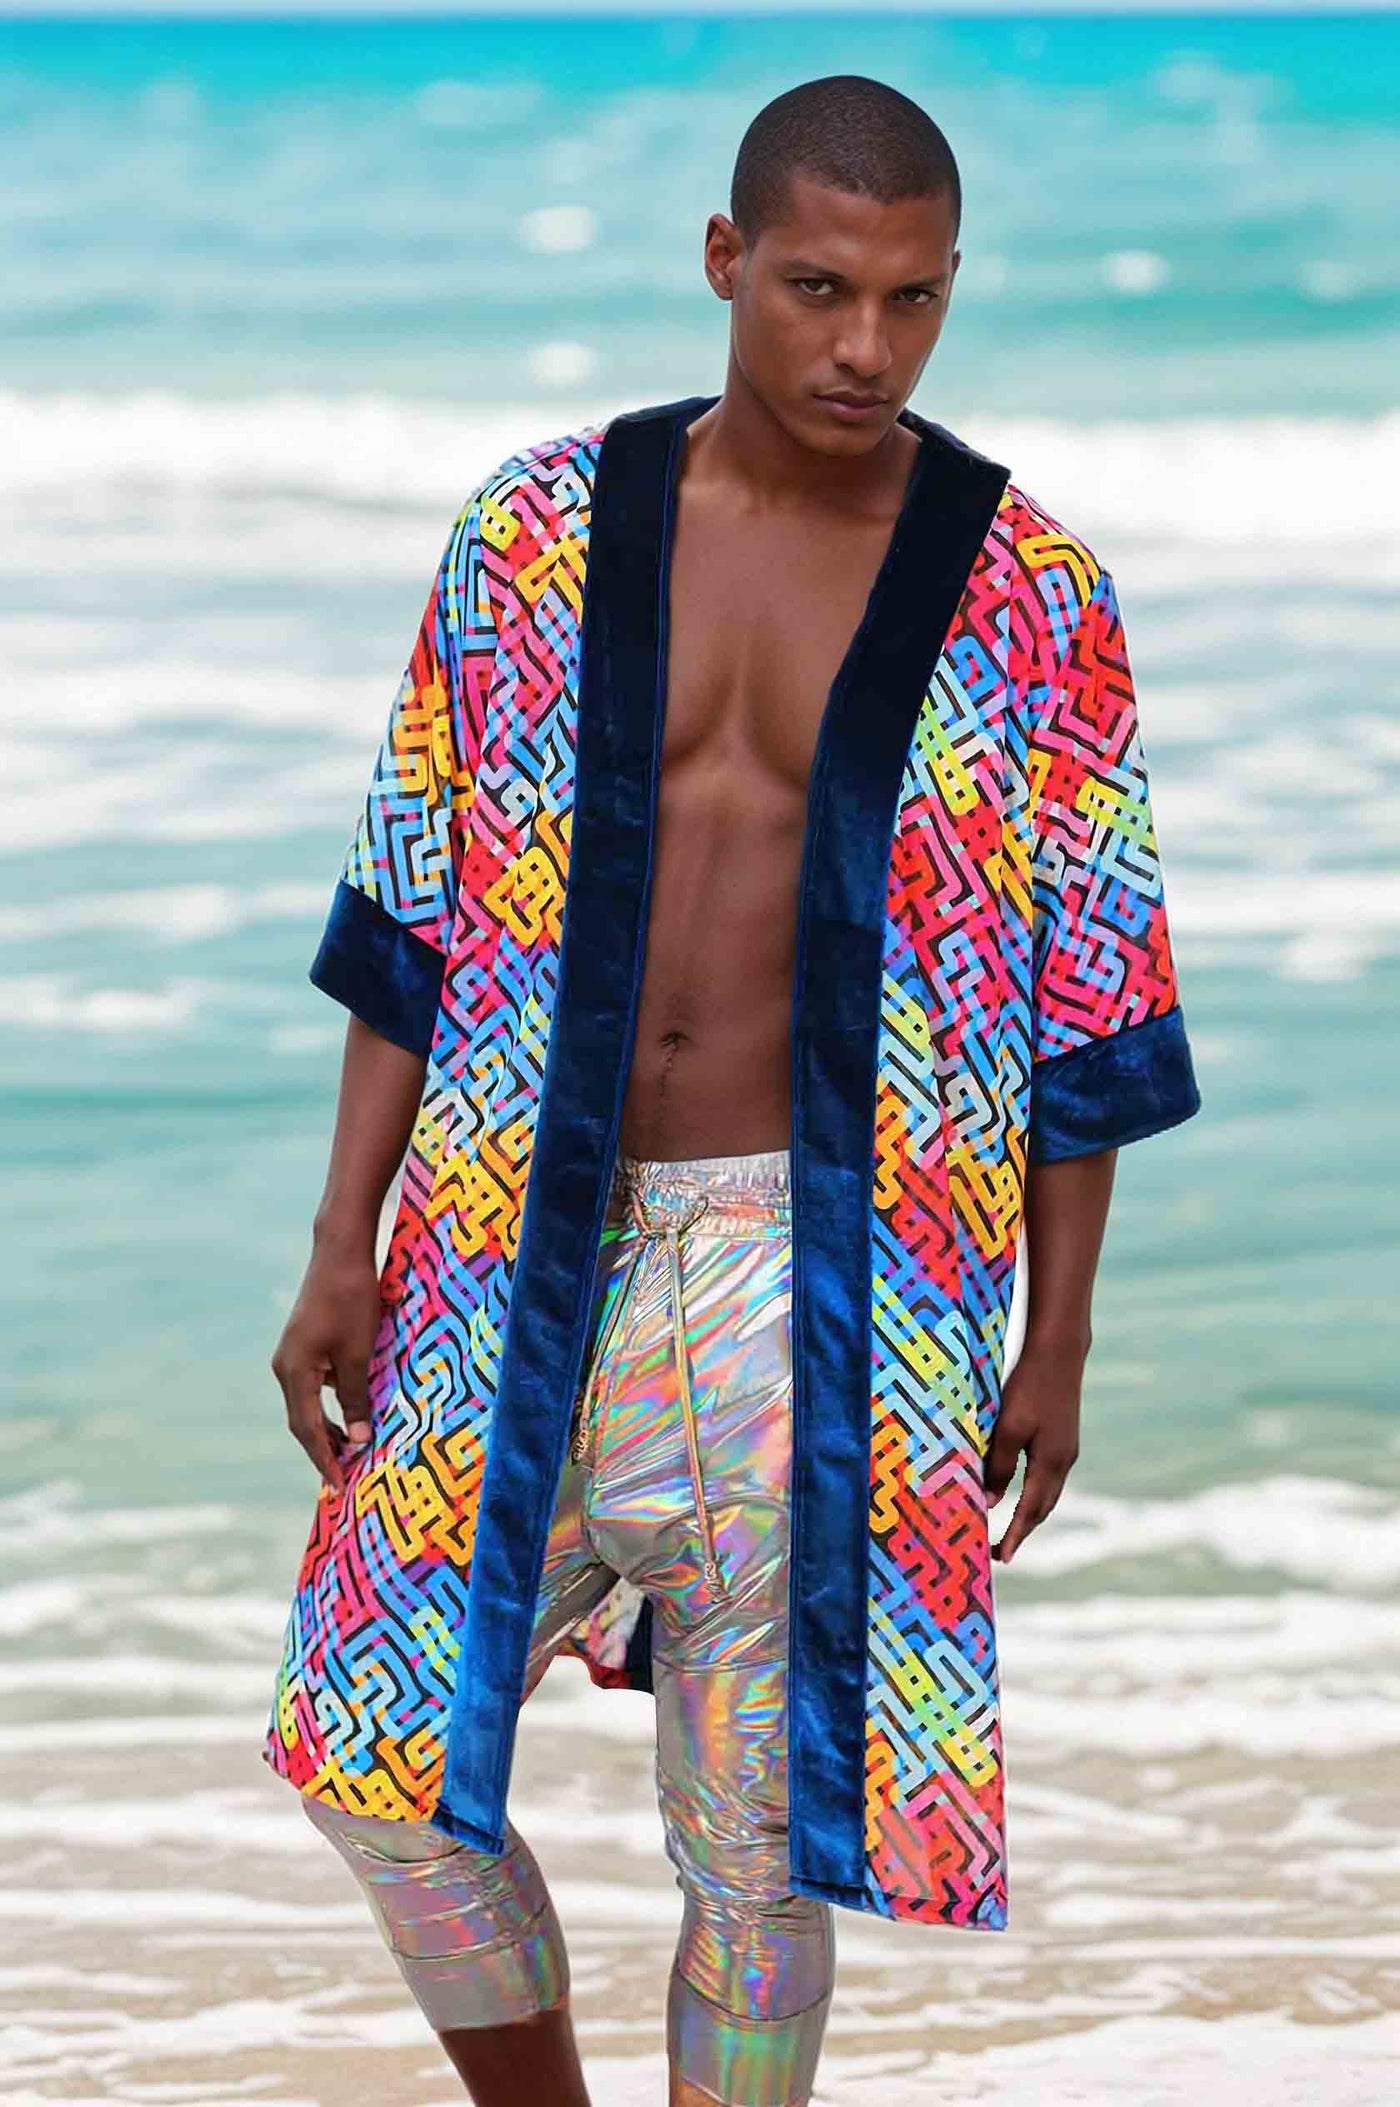 Man wearing colorful kimono from Love Khaos.